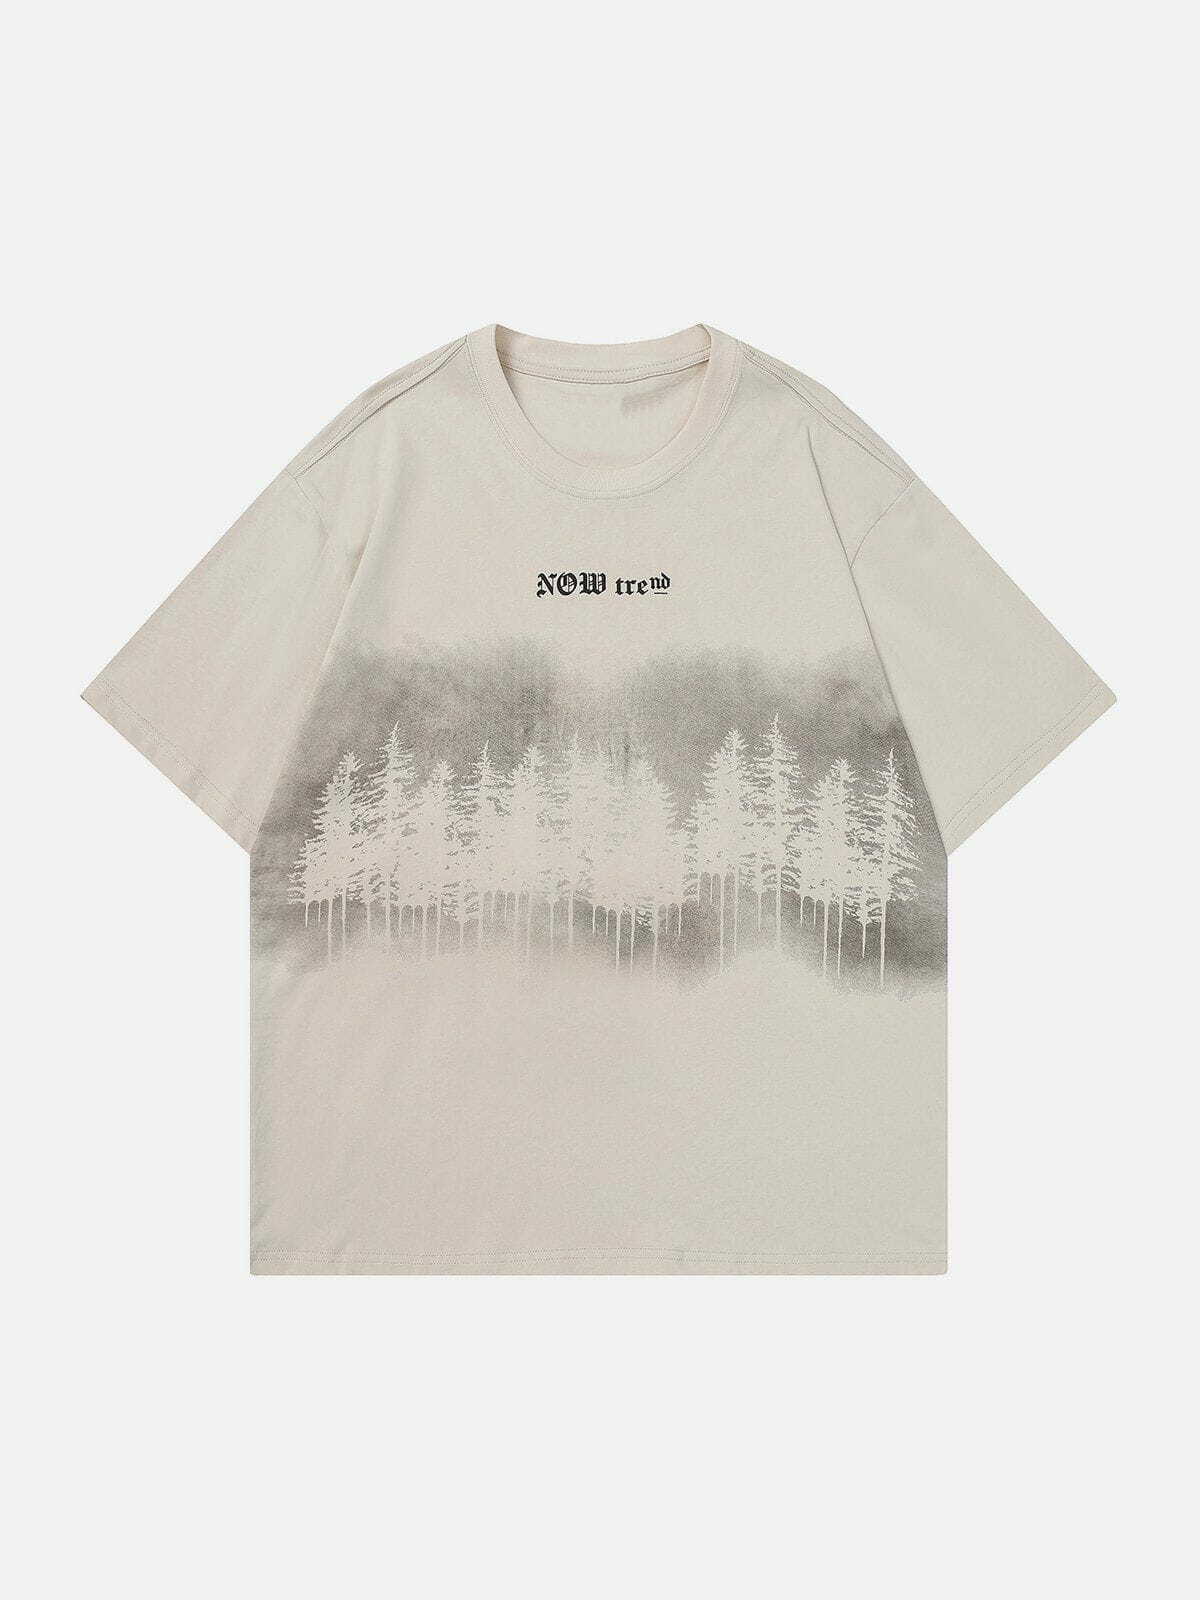 retro forest tee vibrant  edgy streetwear shirt 8196